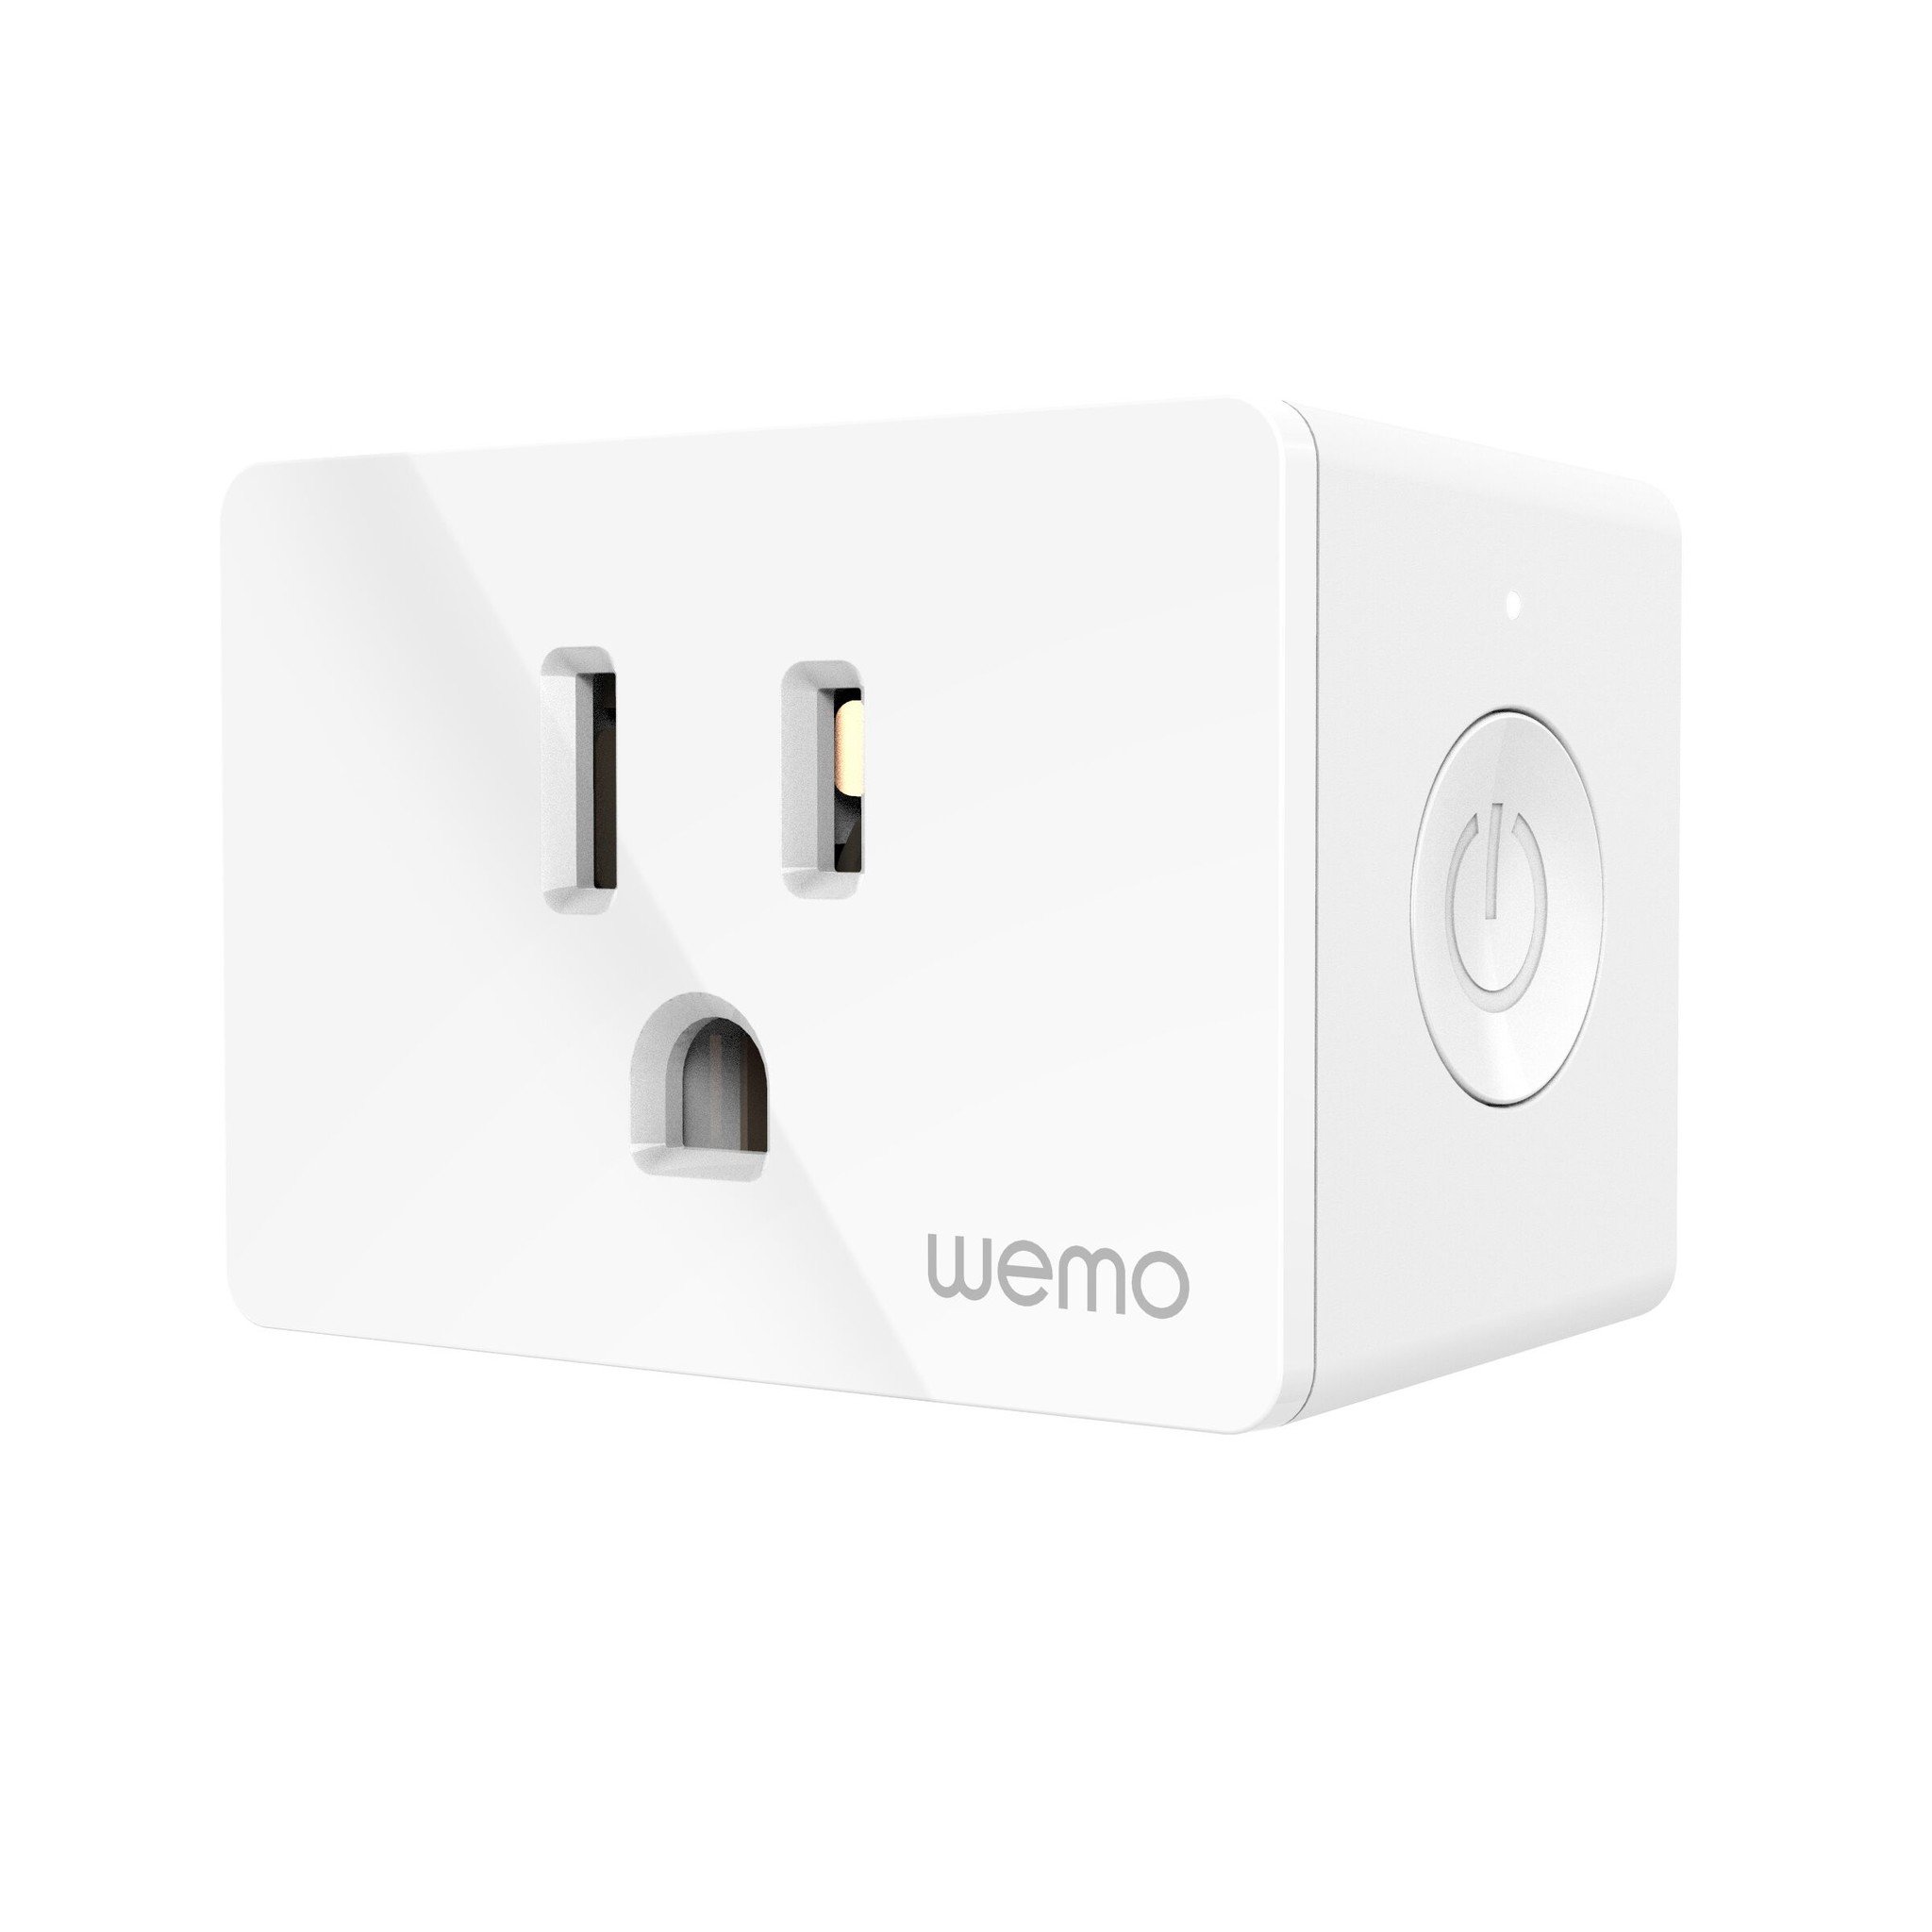 Wemo Wi-Fi Smart Plug on a white background